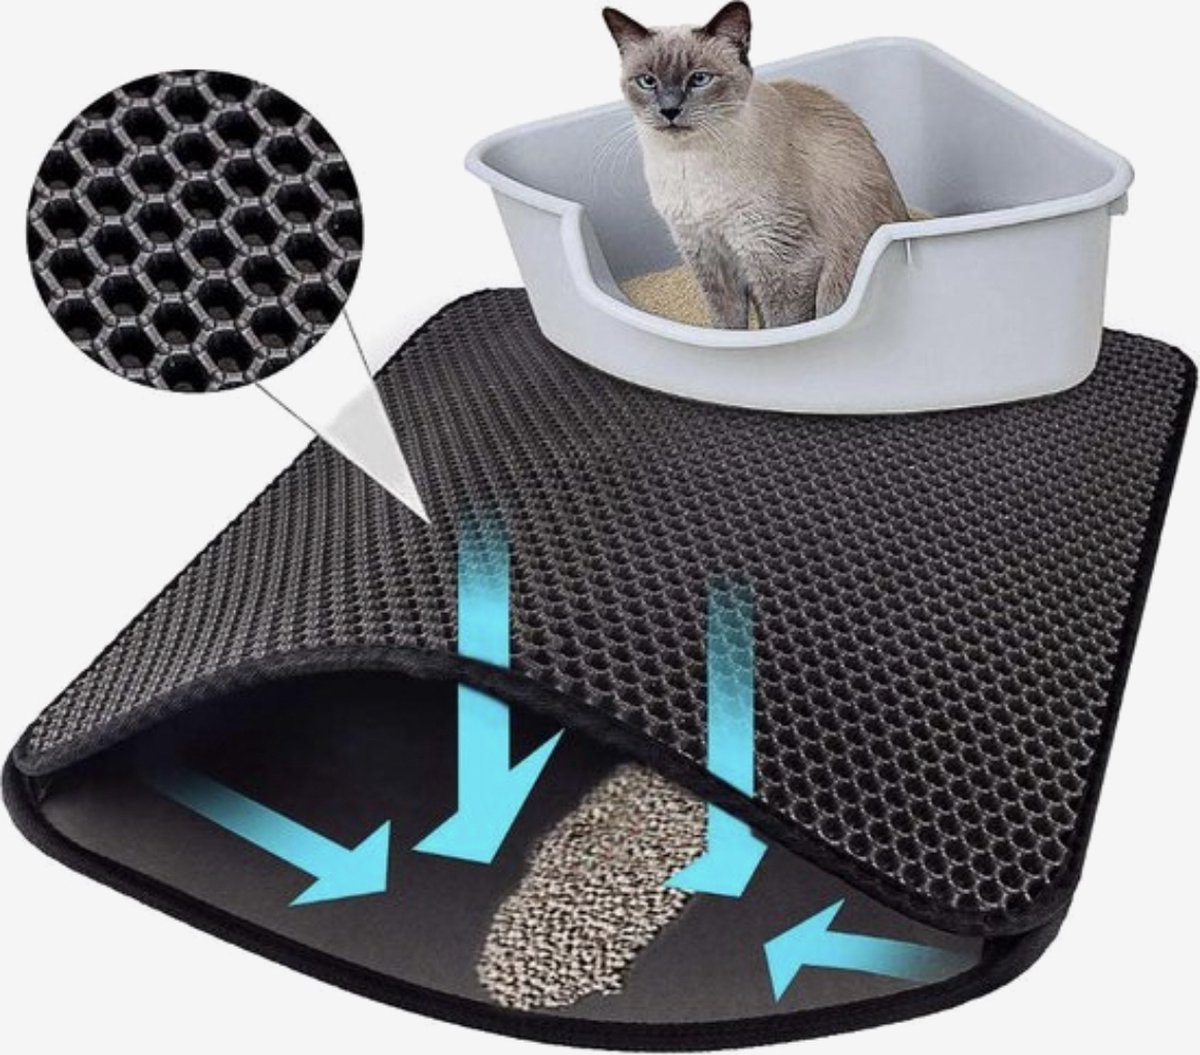 Kattenbakmat - Grit Opvanger - 45 x 60 - Waterdicht - Kattenmat Met Filter - Kattenbak Accessoires - Kat Benodigheden - Cat Litter Mat - Dubbele Laag - Gratis kattenbal met geluid